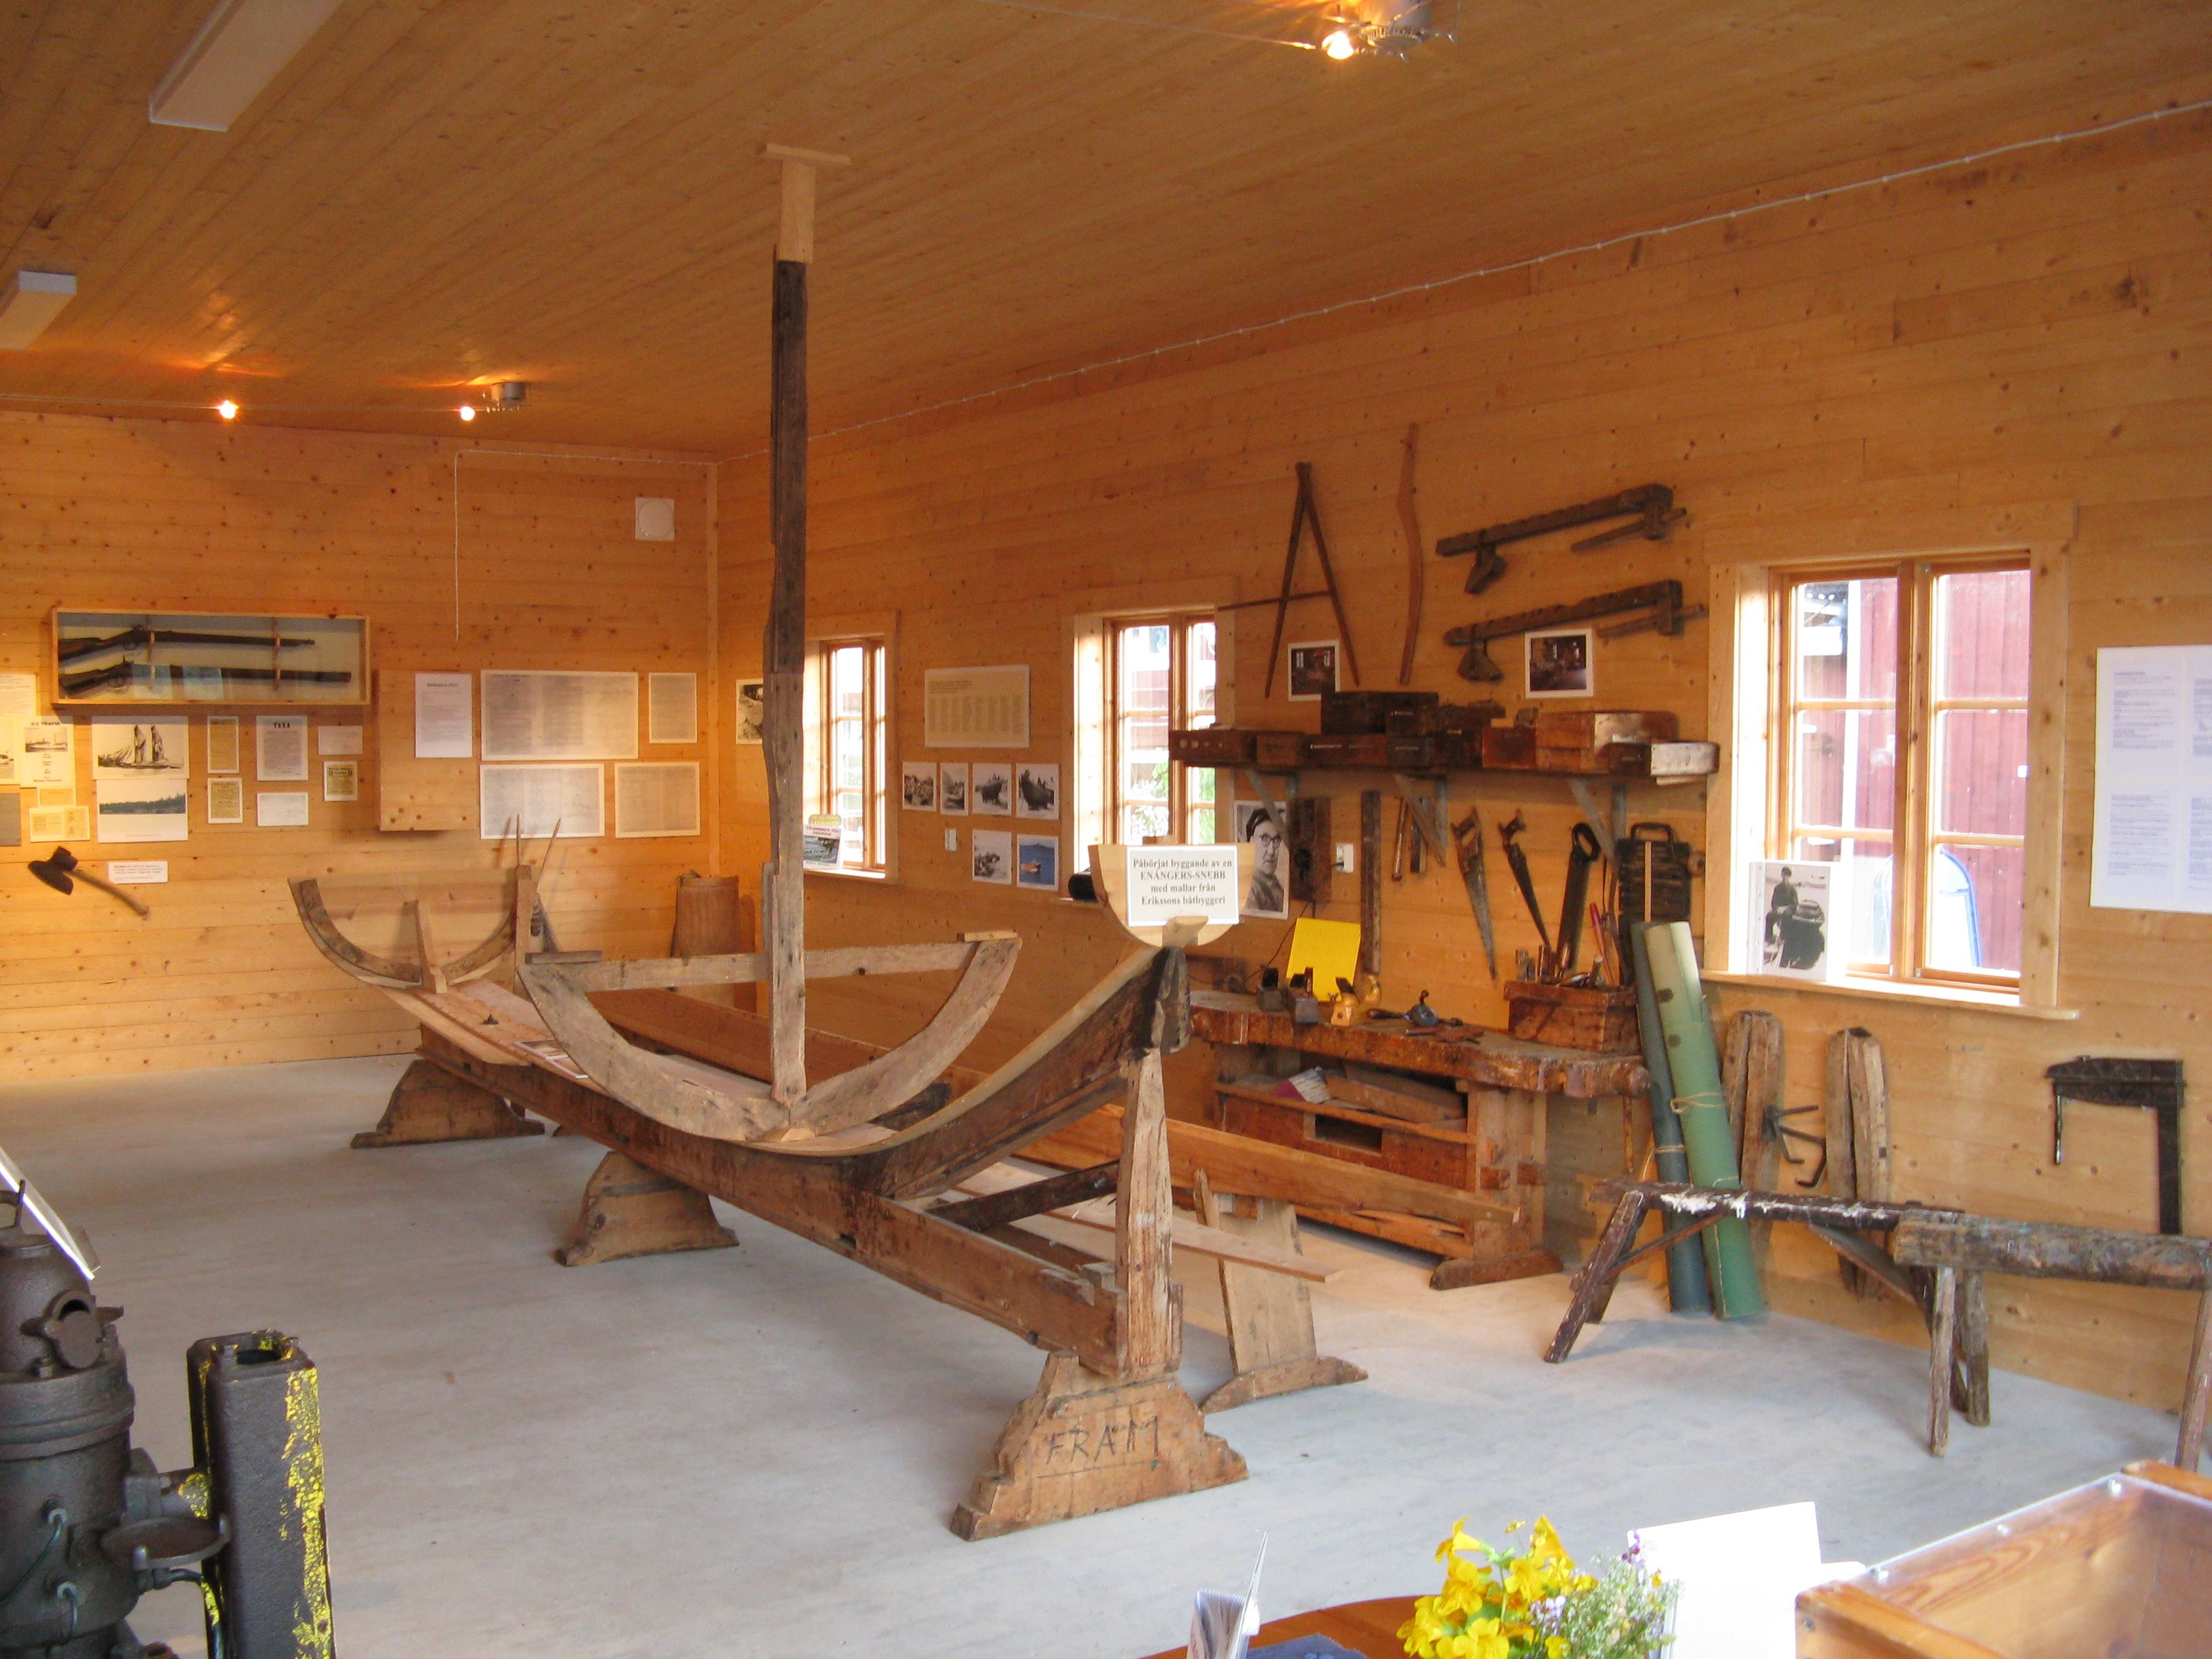 Engine & boat builder Museum, Borka Brygga